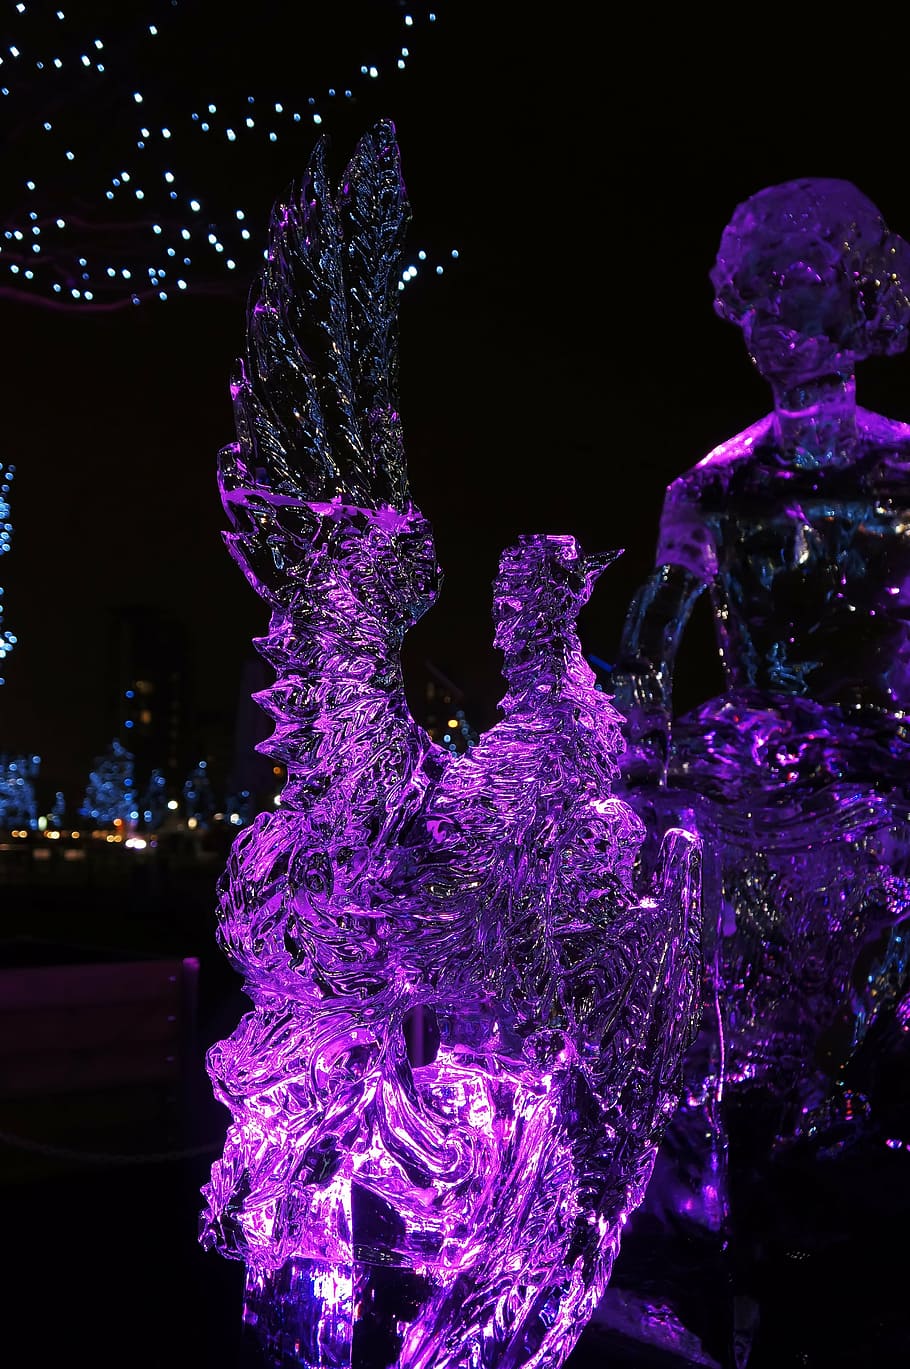 purple, violet, dark, night, ice, sculpture, beautiful, winter